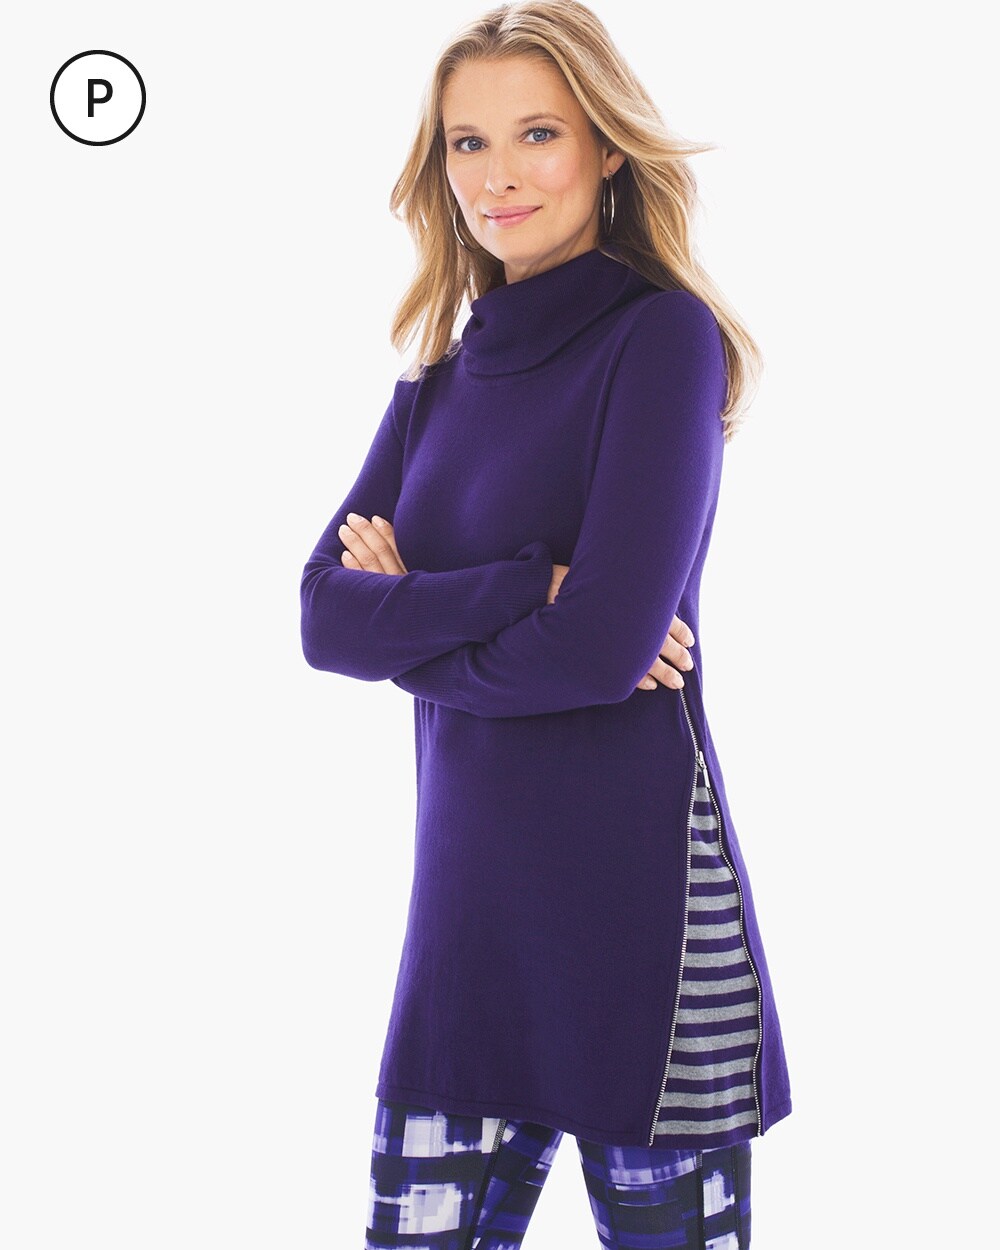 Zenergy Petite Violette Stripe-Inset Sweater